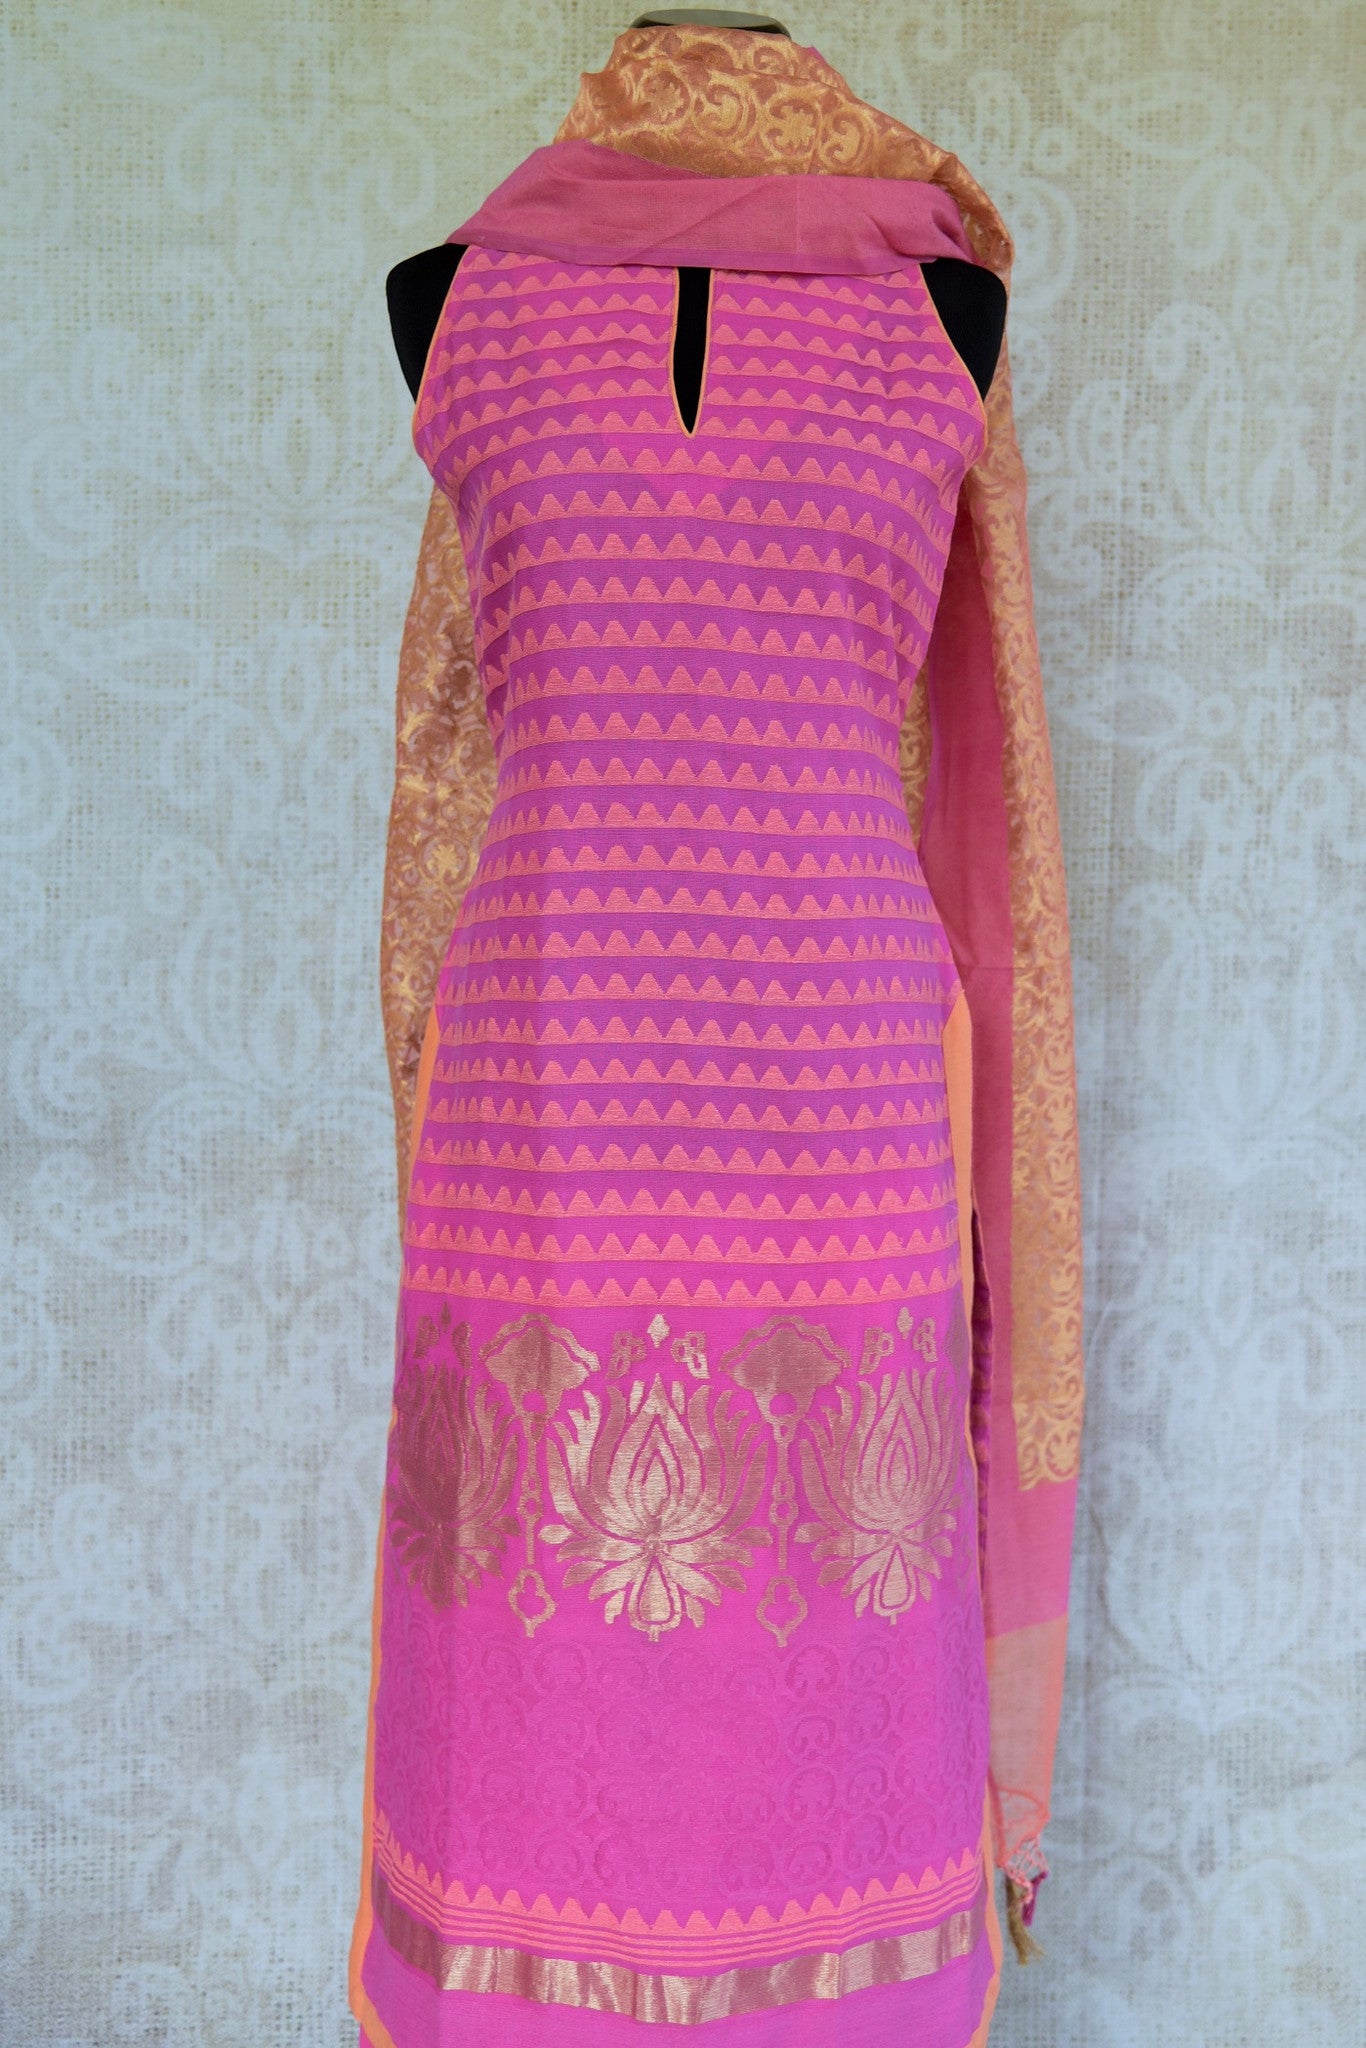 501011-suit-sleeveless-pink-geometric-pattern-golden-lotus-scarf-top-view